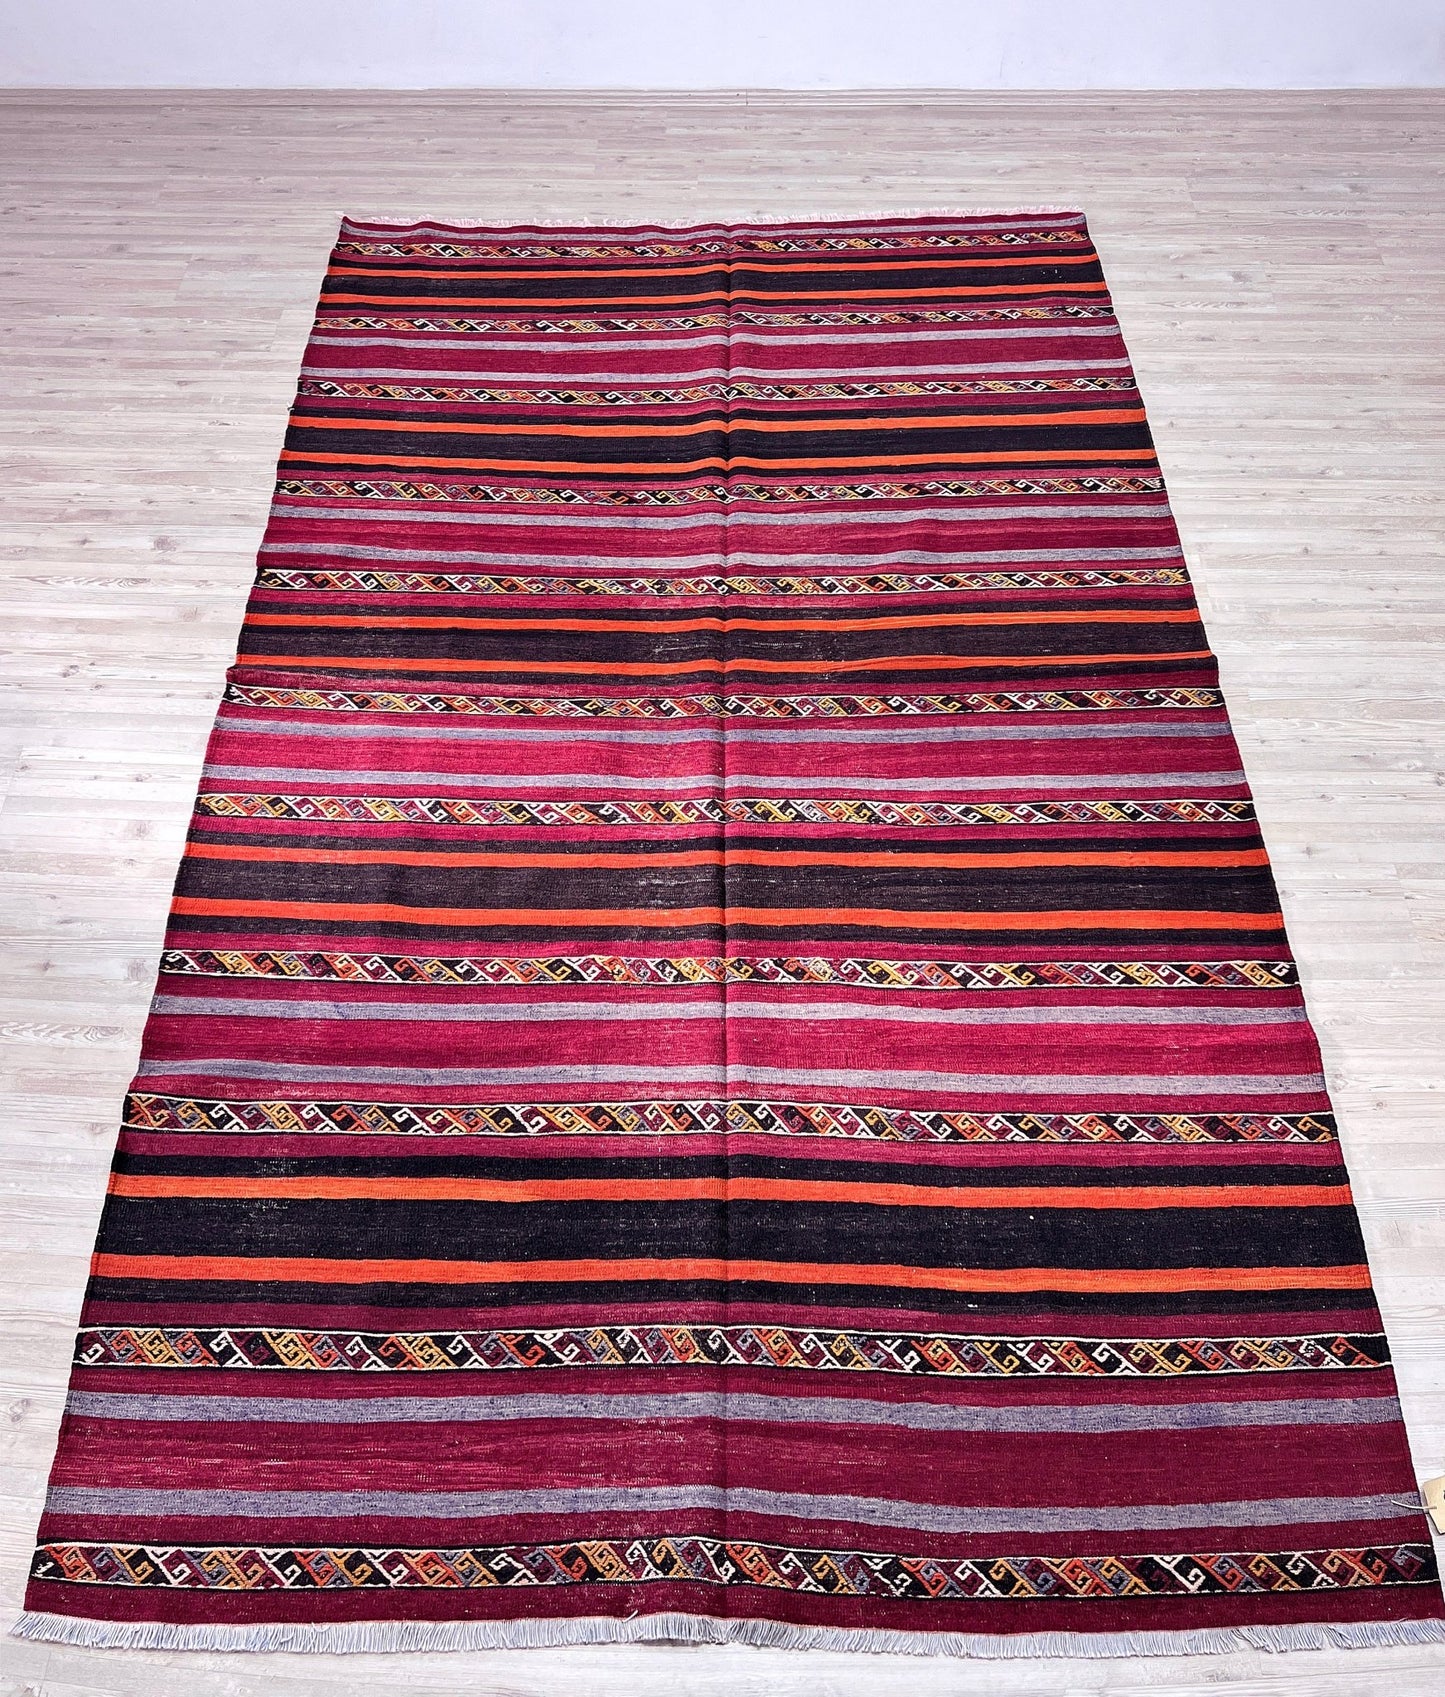 Sivas kilim vintage turkish rug storesan fancisco bay area oriental rug palo alto berkeley buy rug online california